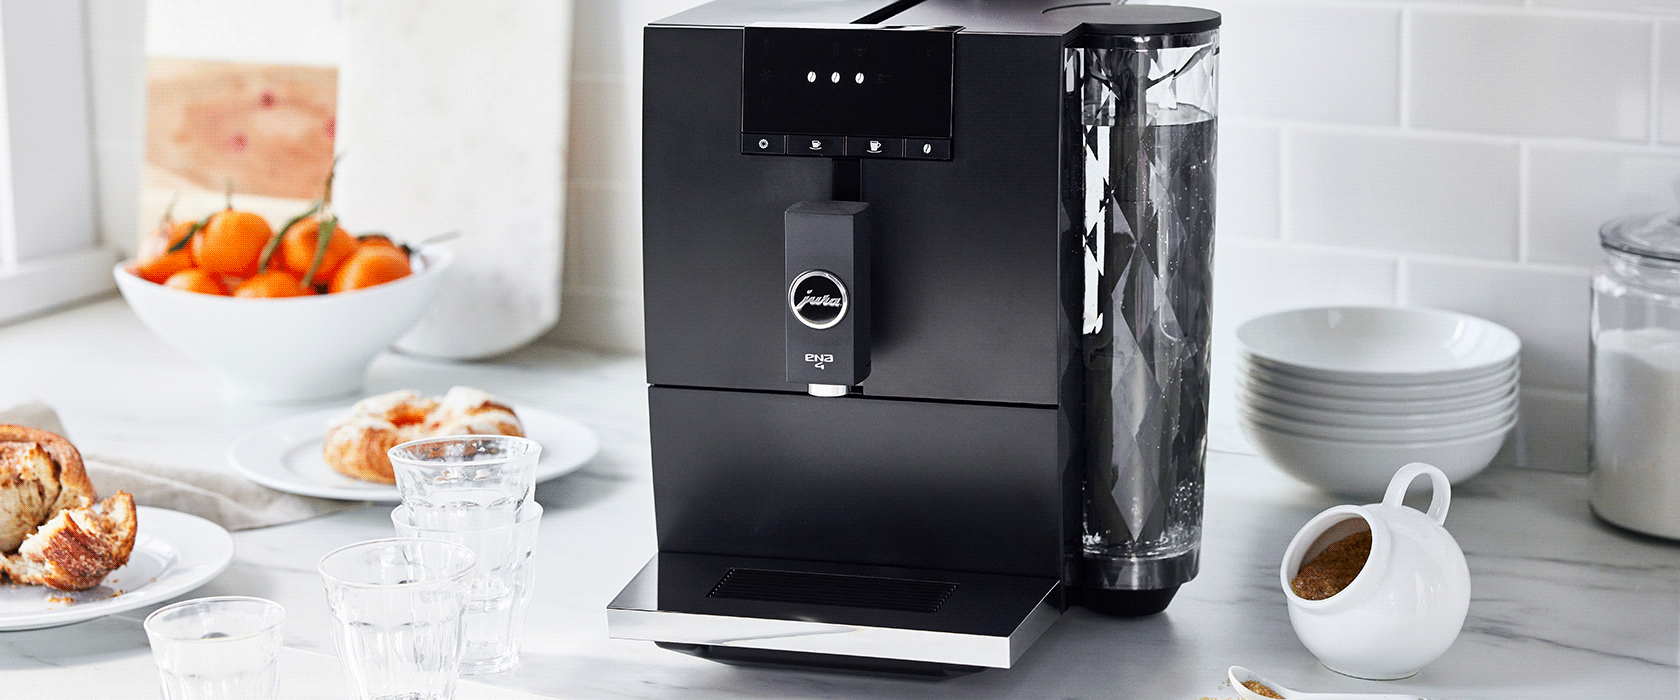 Jura Ena 4 coffee and espresso machine